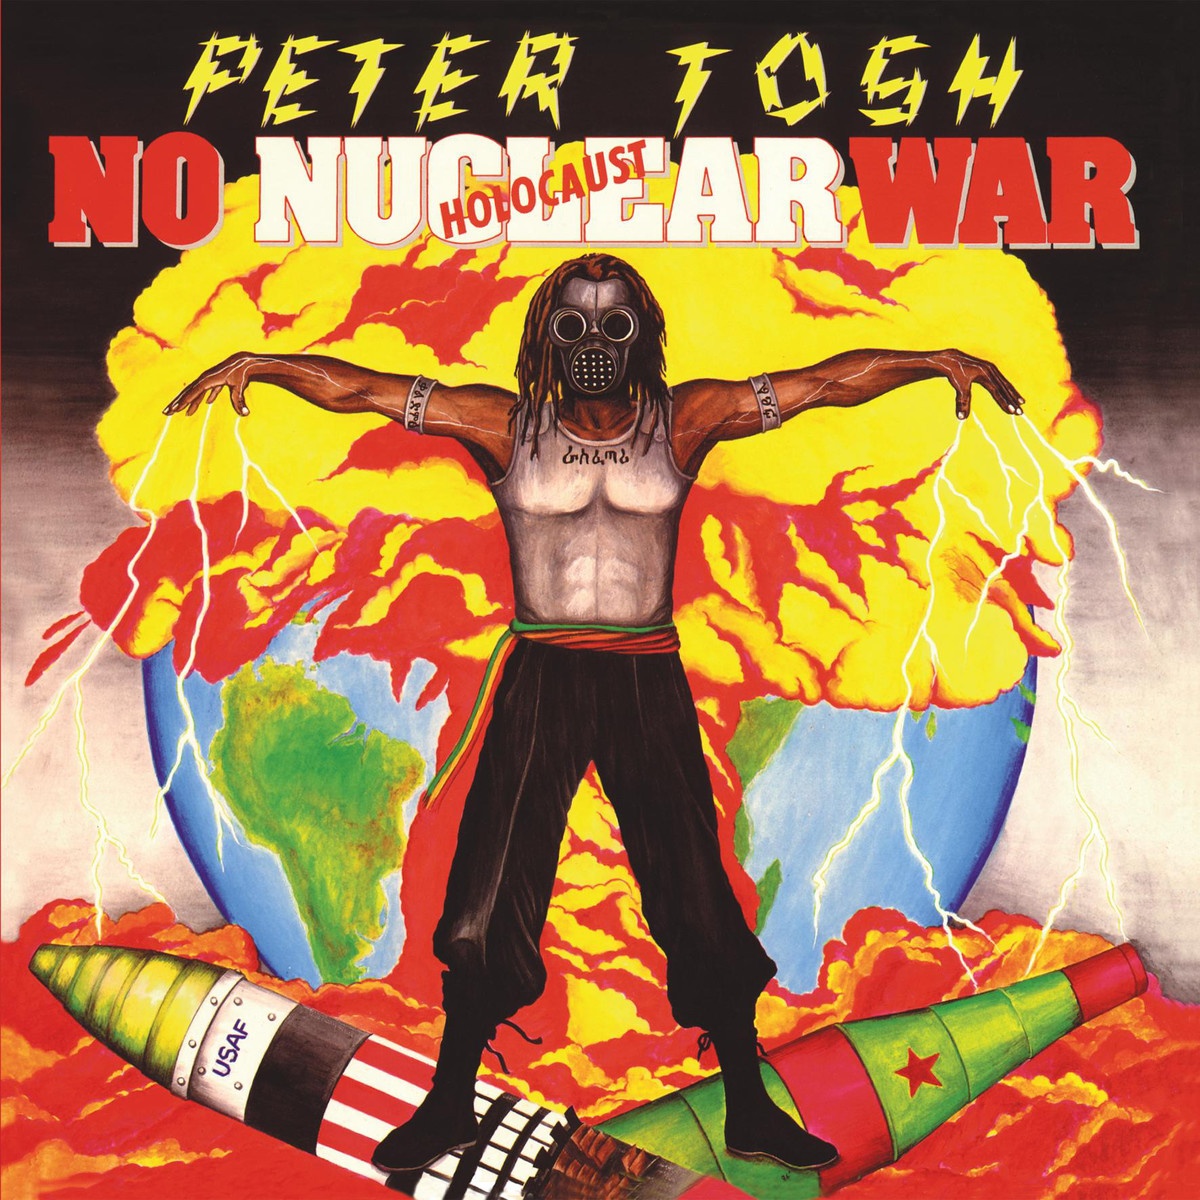 No Nuclear War (Single Version; 2002 Remastered Version)